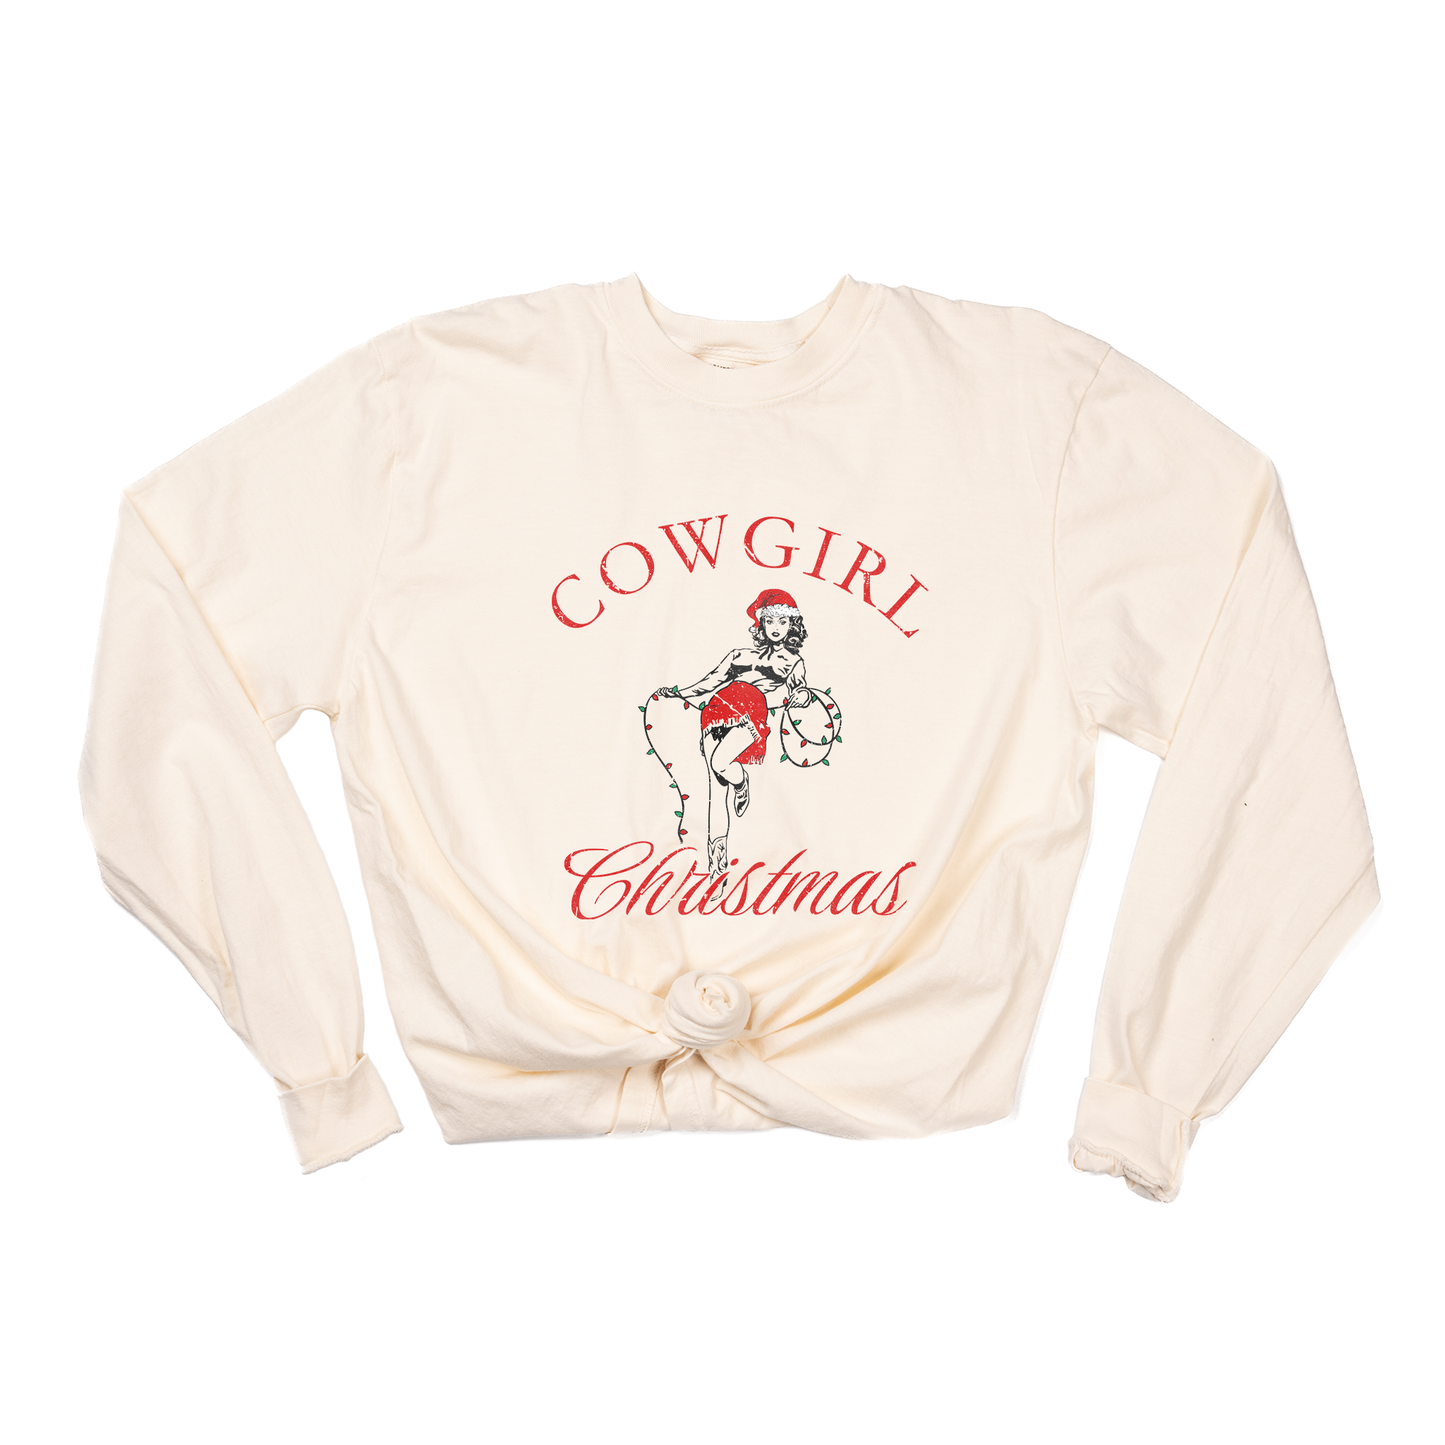 Cowgirl Christmas - Tee (Vintage Natural, Long Sleeve)